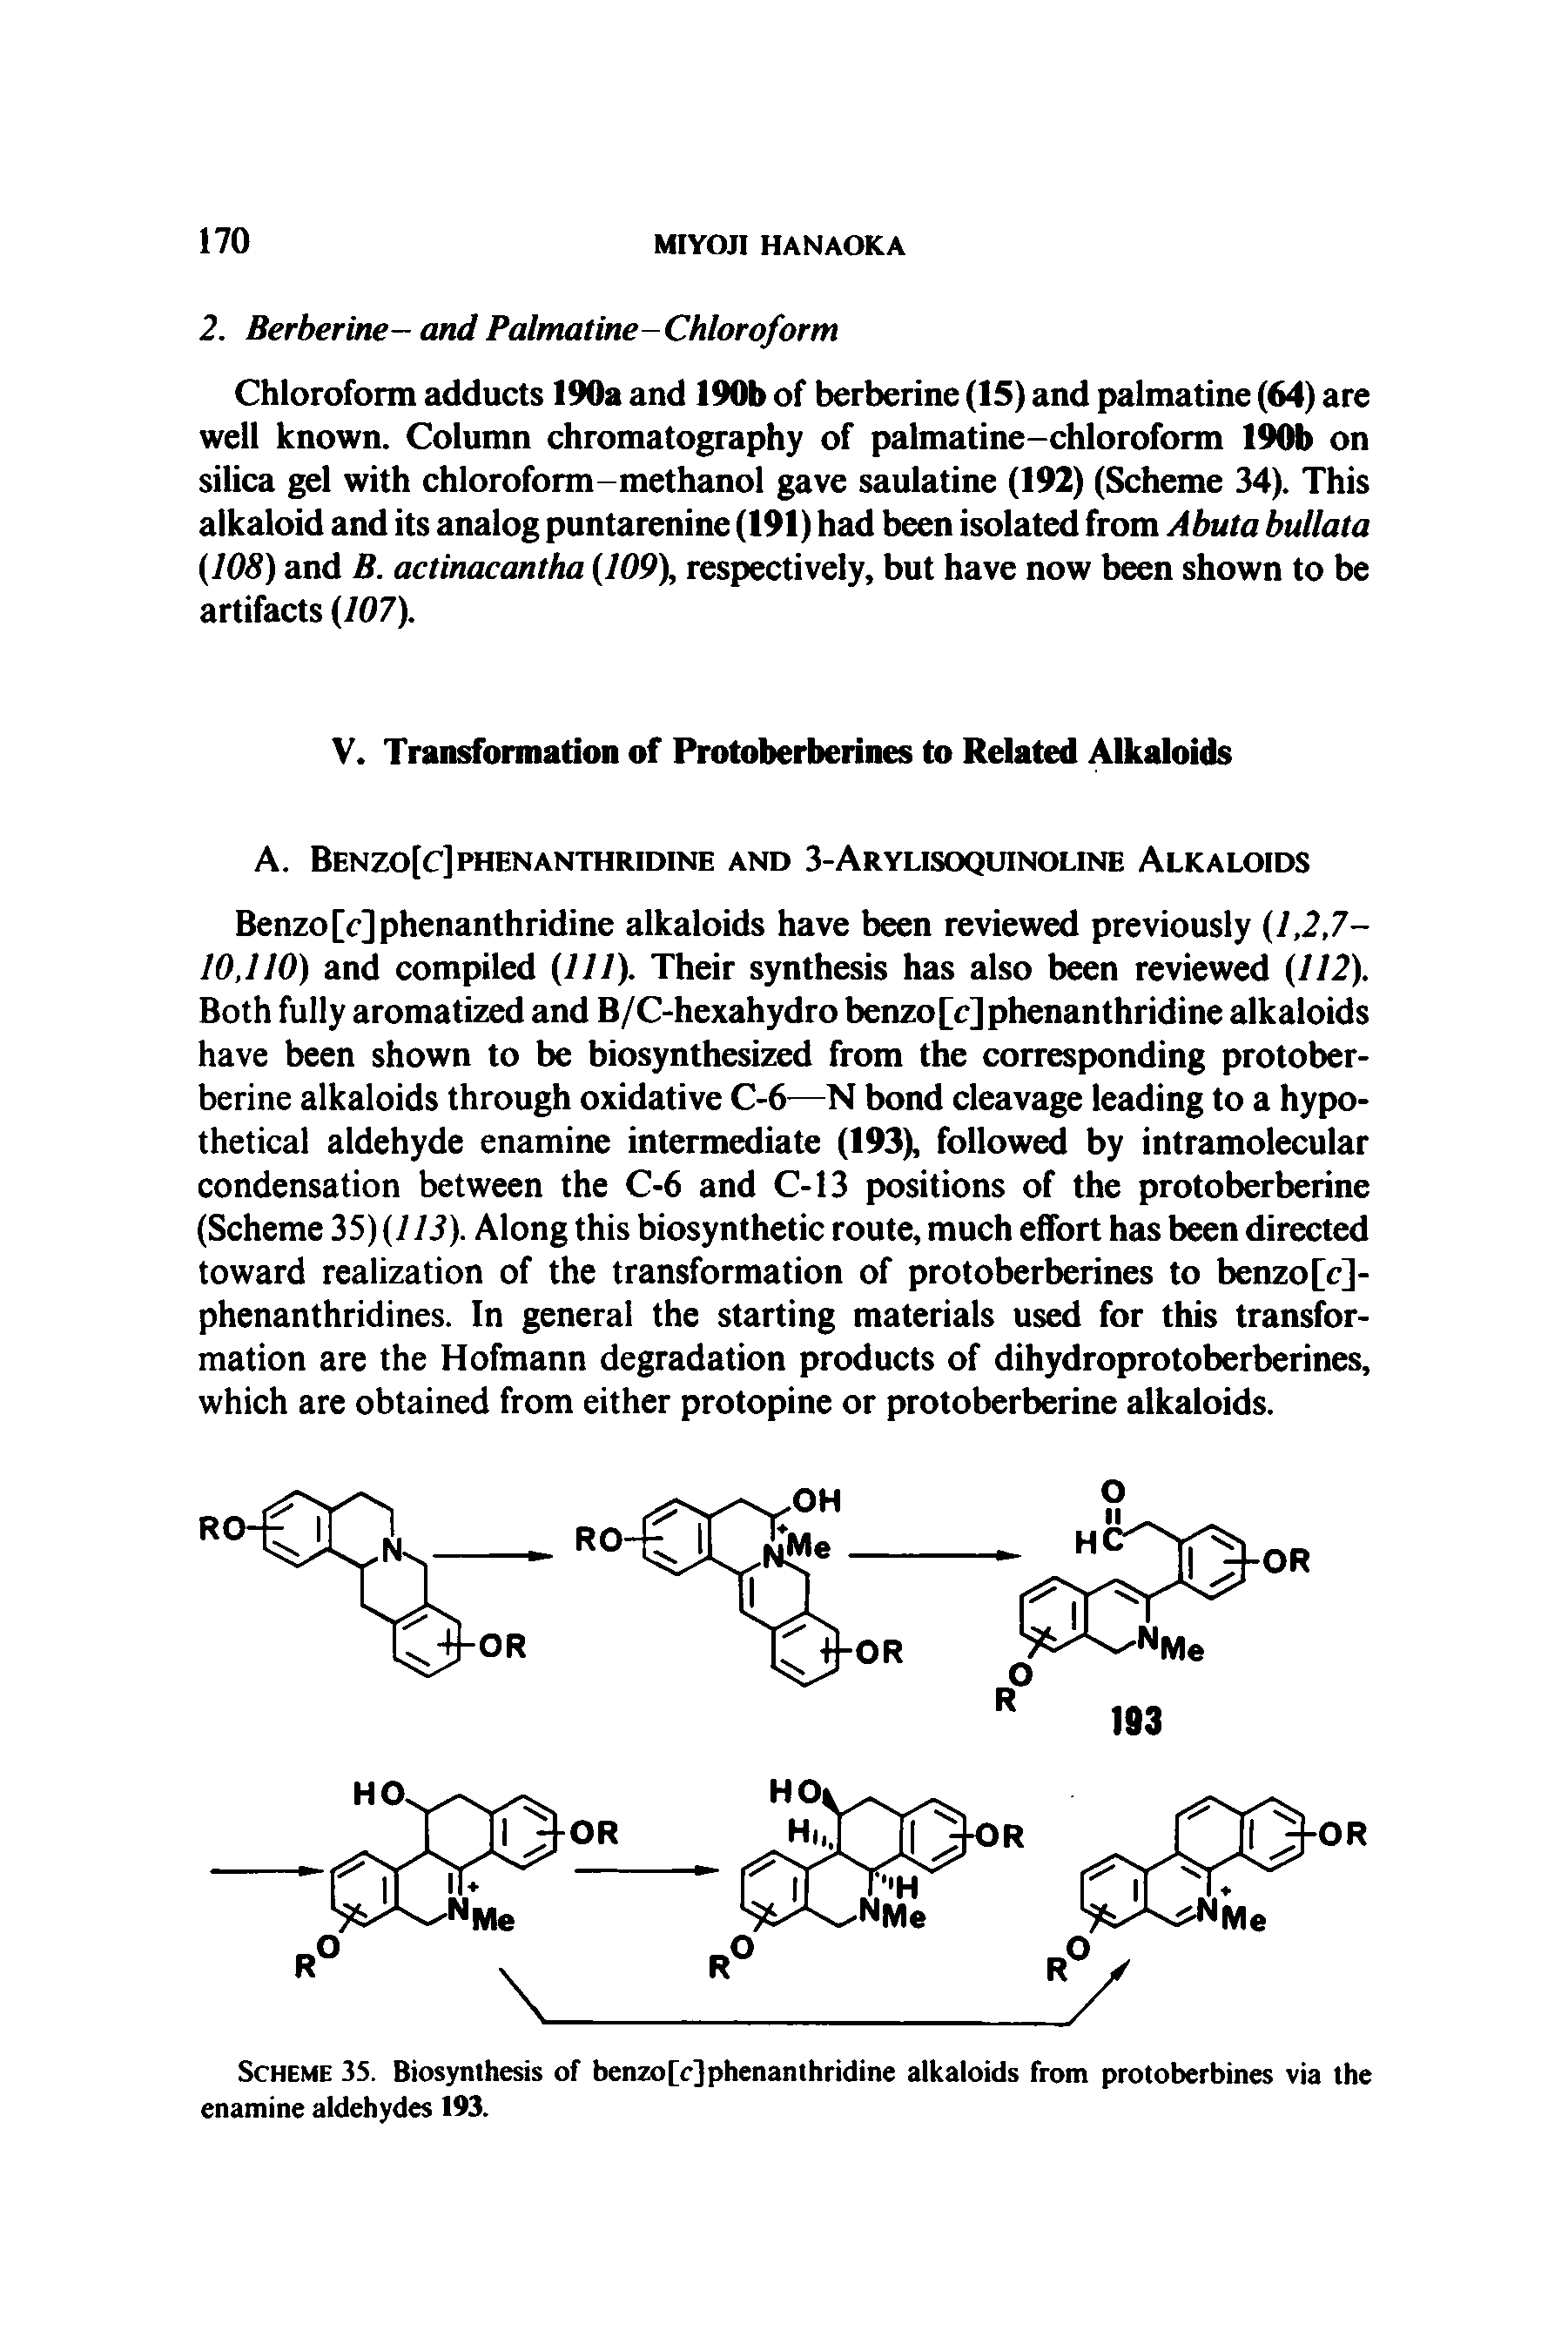 Scheme 35. Biosynthesis of benzo[c]phenanthridine alkaloids from protoberbines via the enamine aldehydes 193.